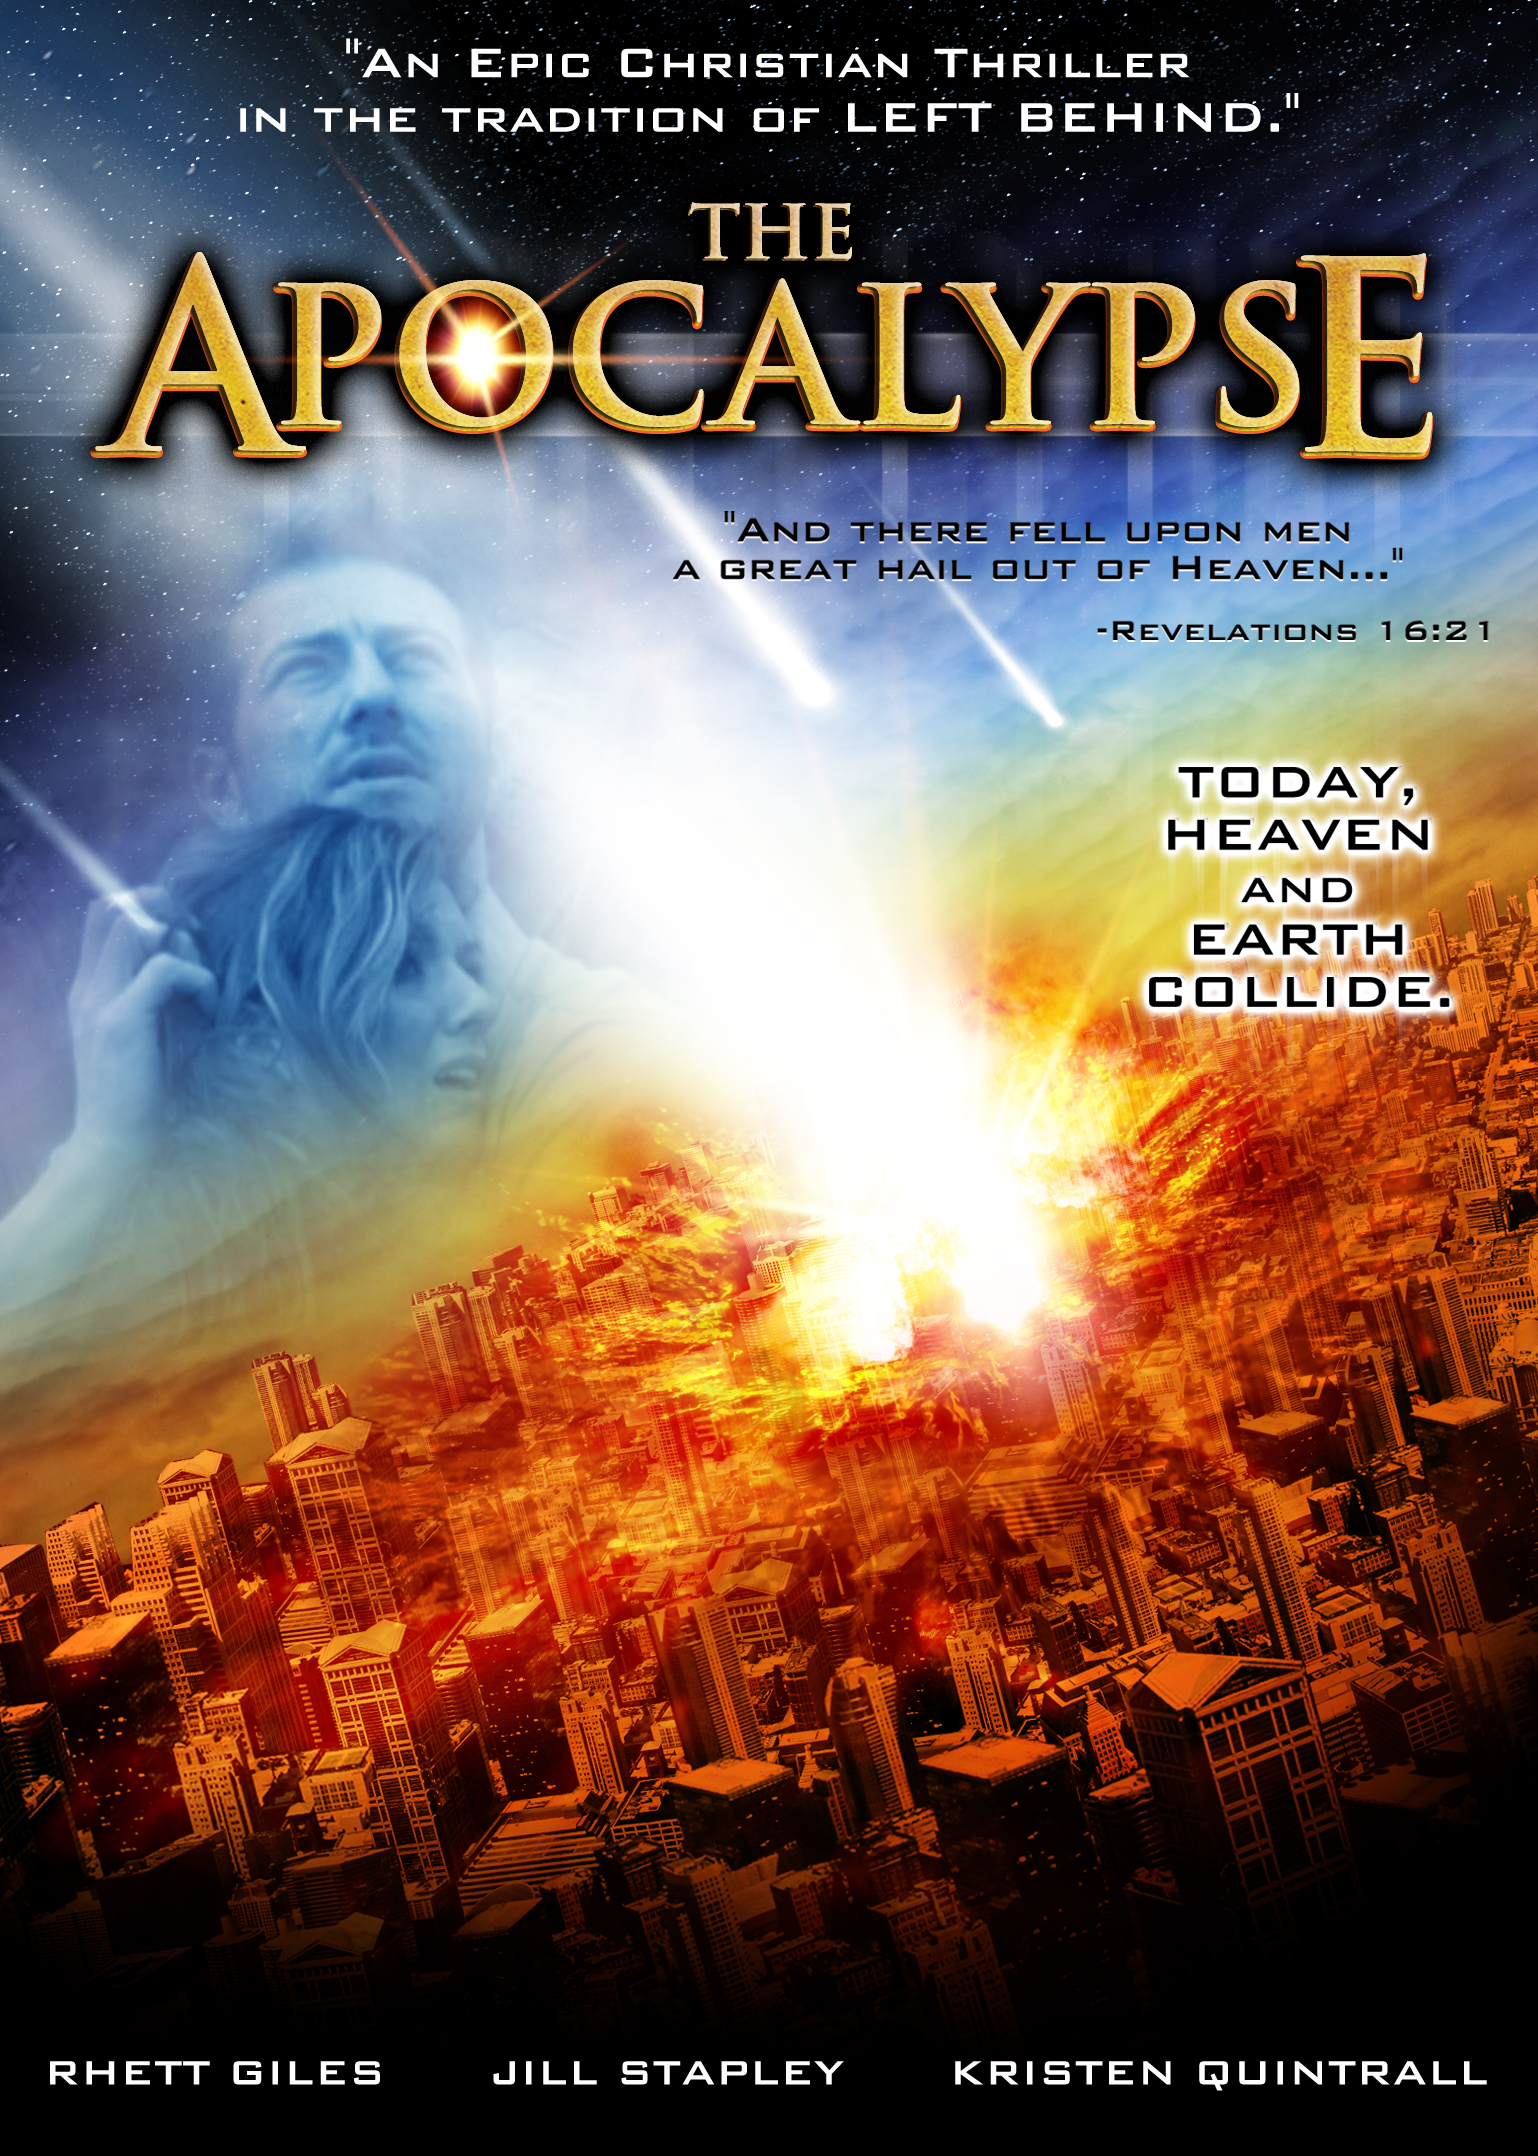 brittany allman share apocalypse full movie online photos